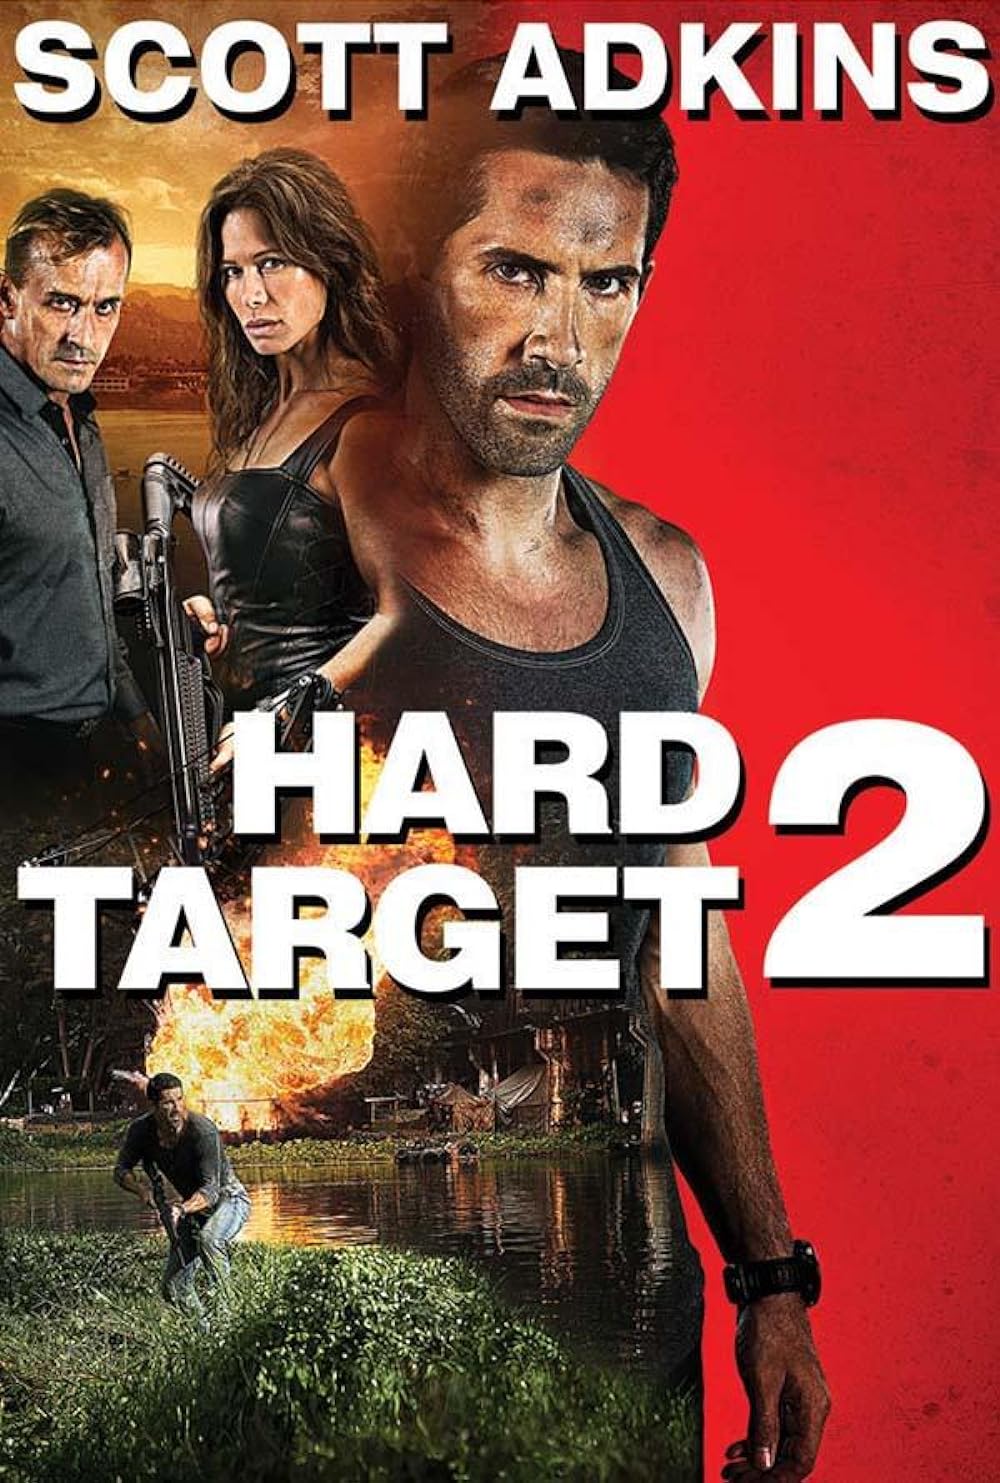 FULL MOVIE: Hard Target 2 (2016)